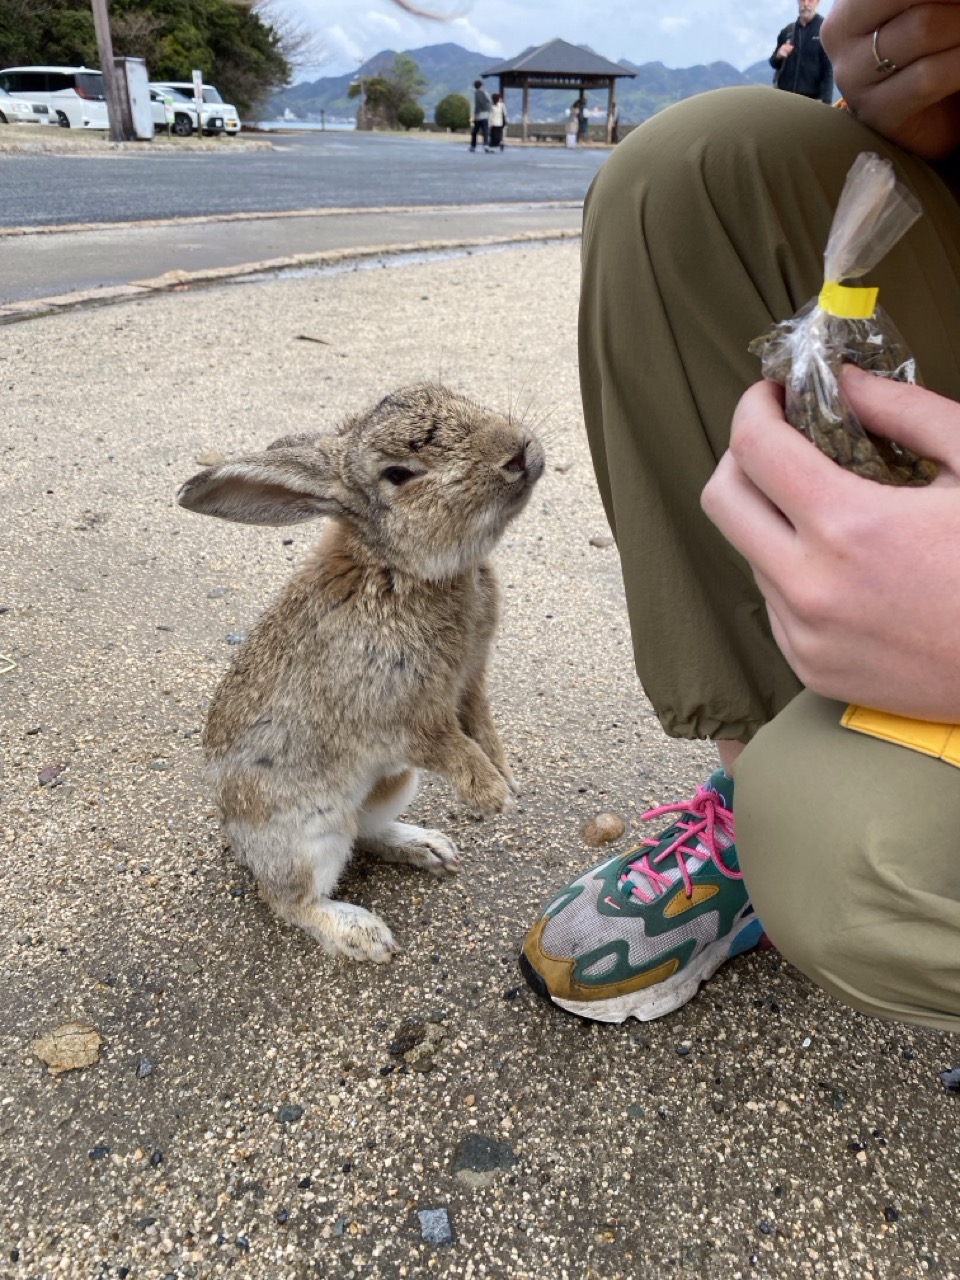 A friendly rabbit being polite